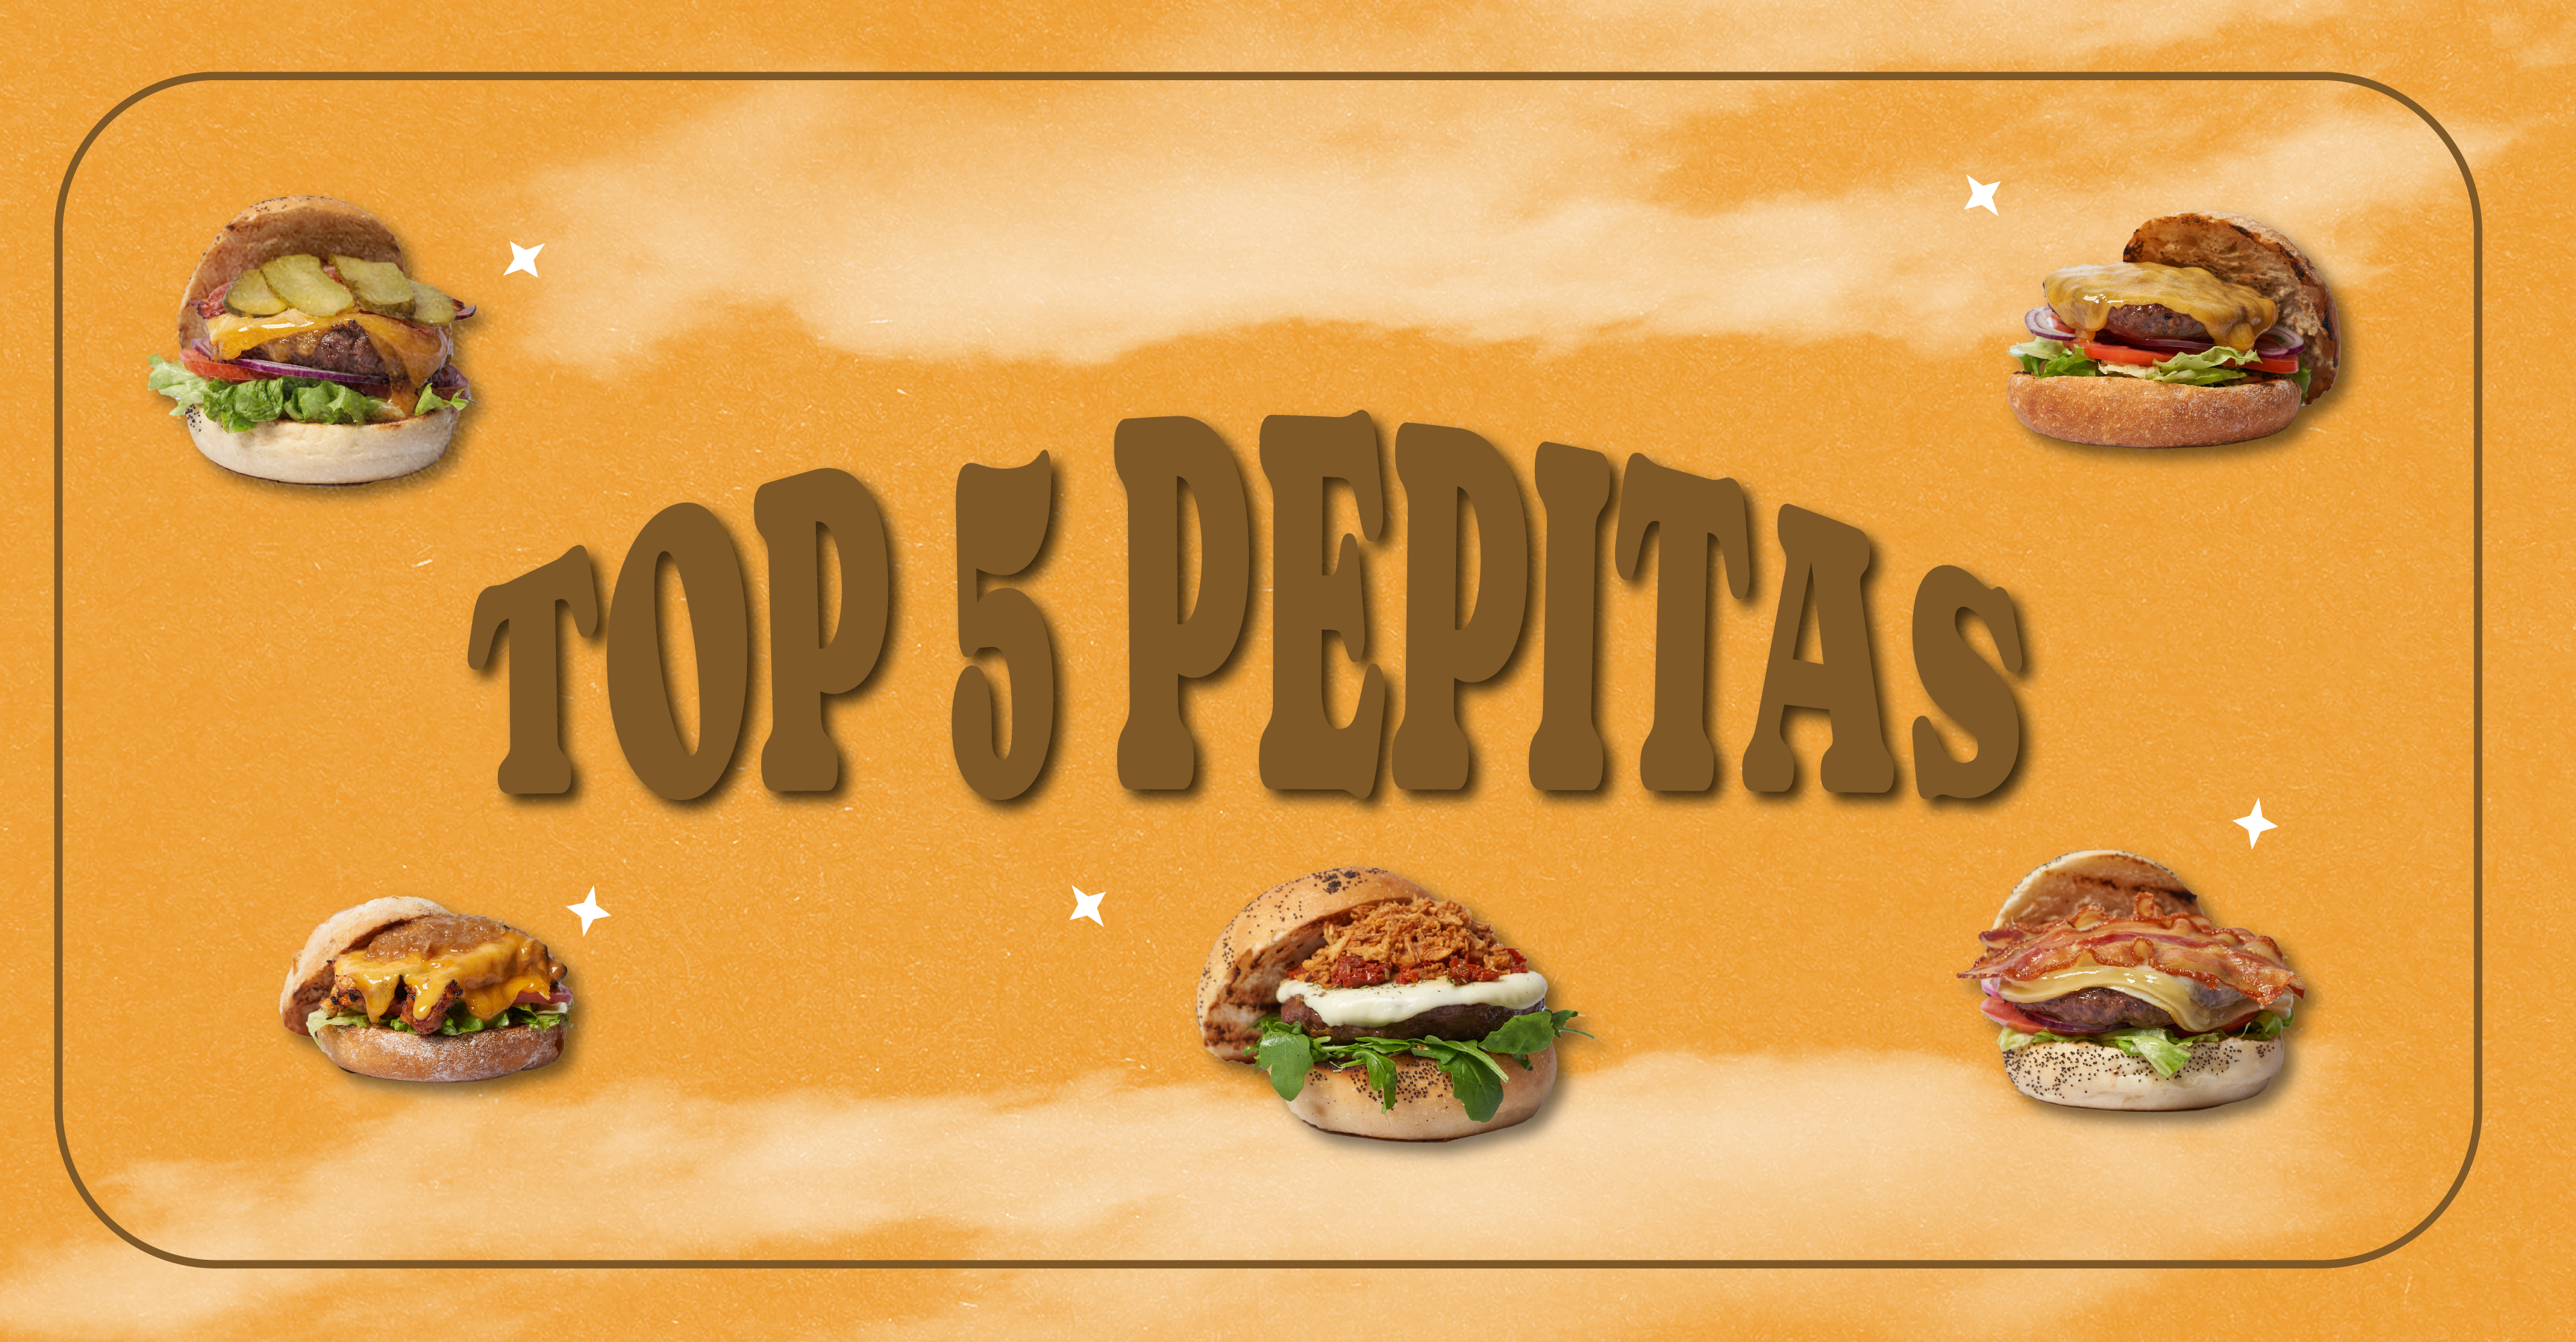 Top 5 Burgers La Pepita